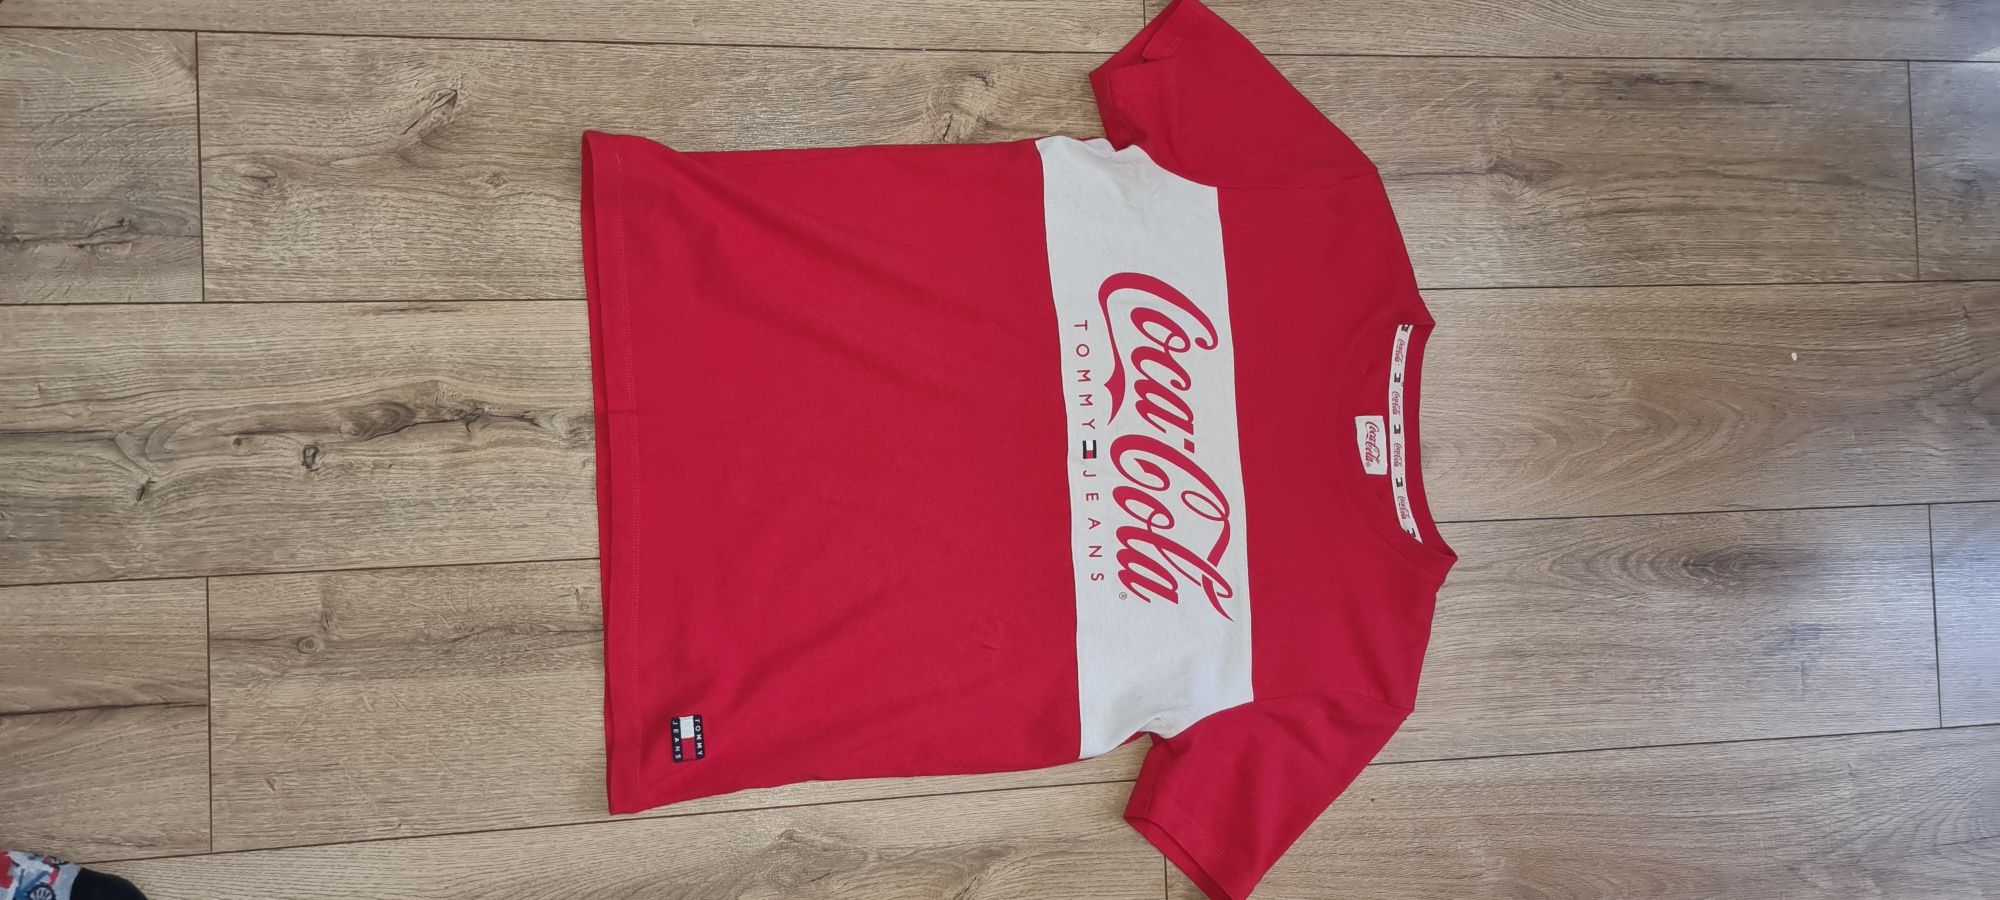 Koszulka Tommy Hilfiger & Coca-Cola